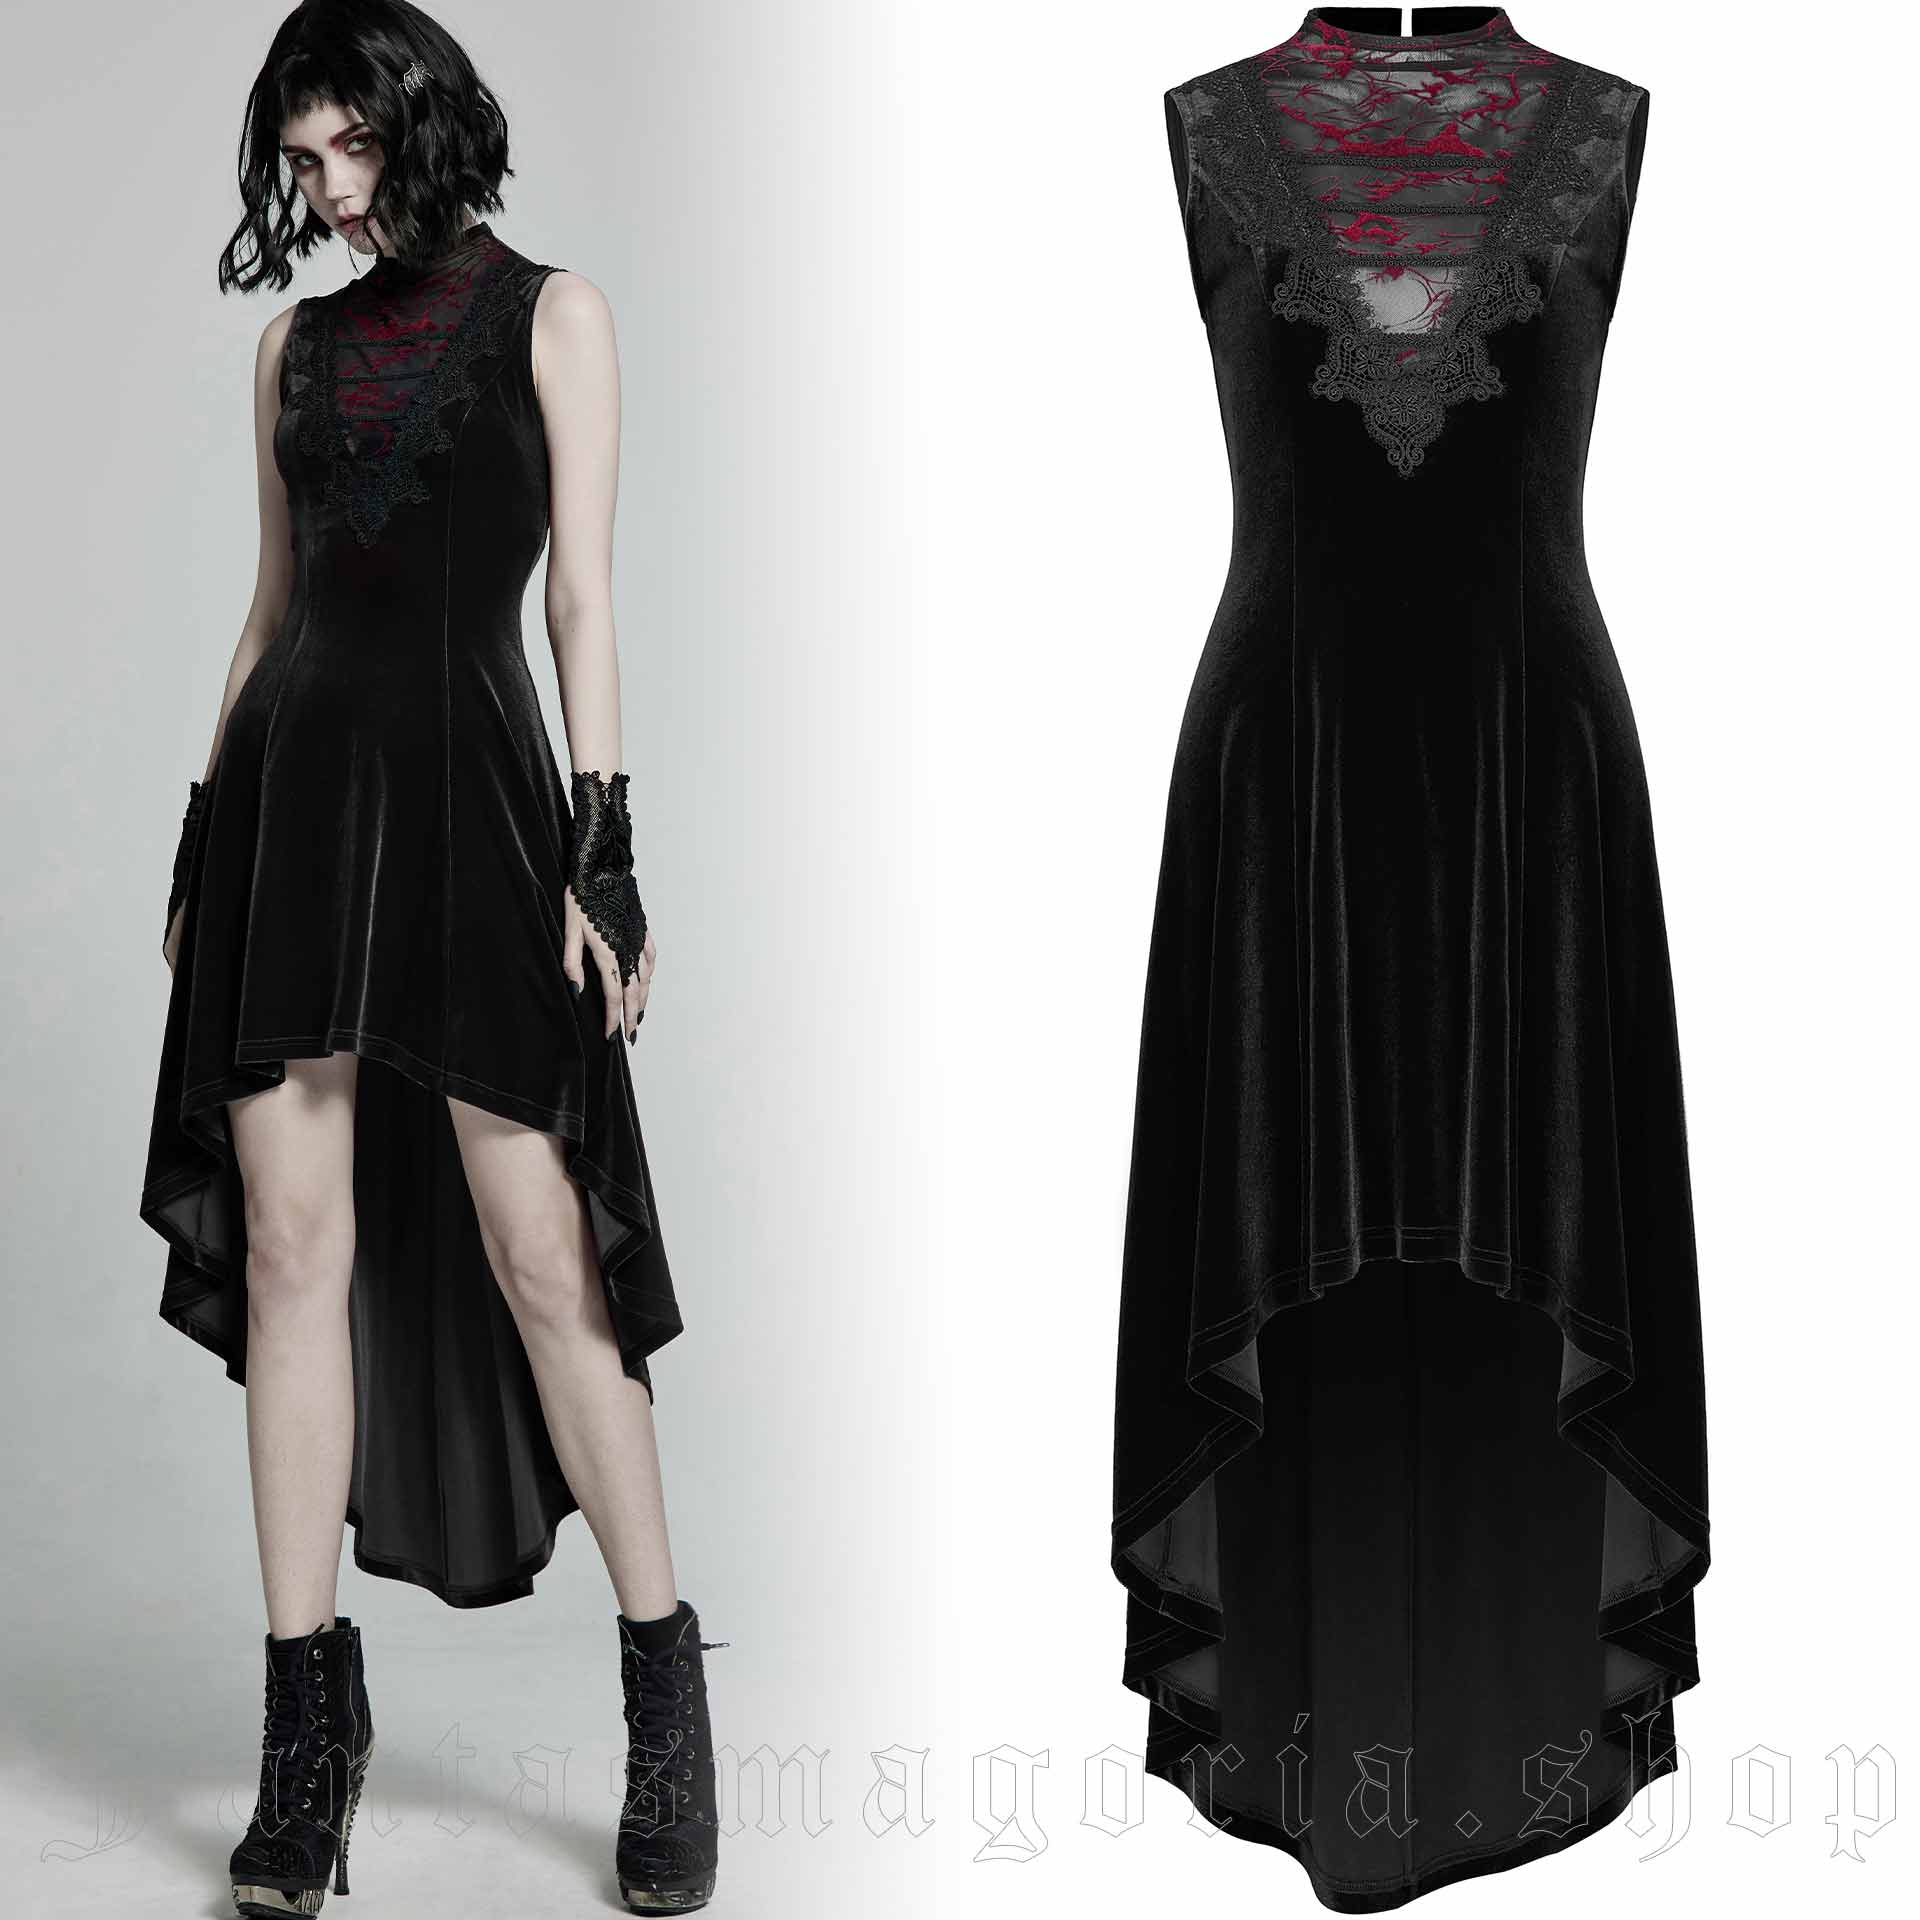 Hidden Desire Black Dress - Punk Rave - WQ-523/BK 1